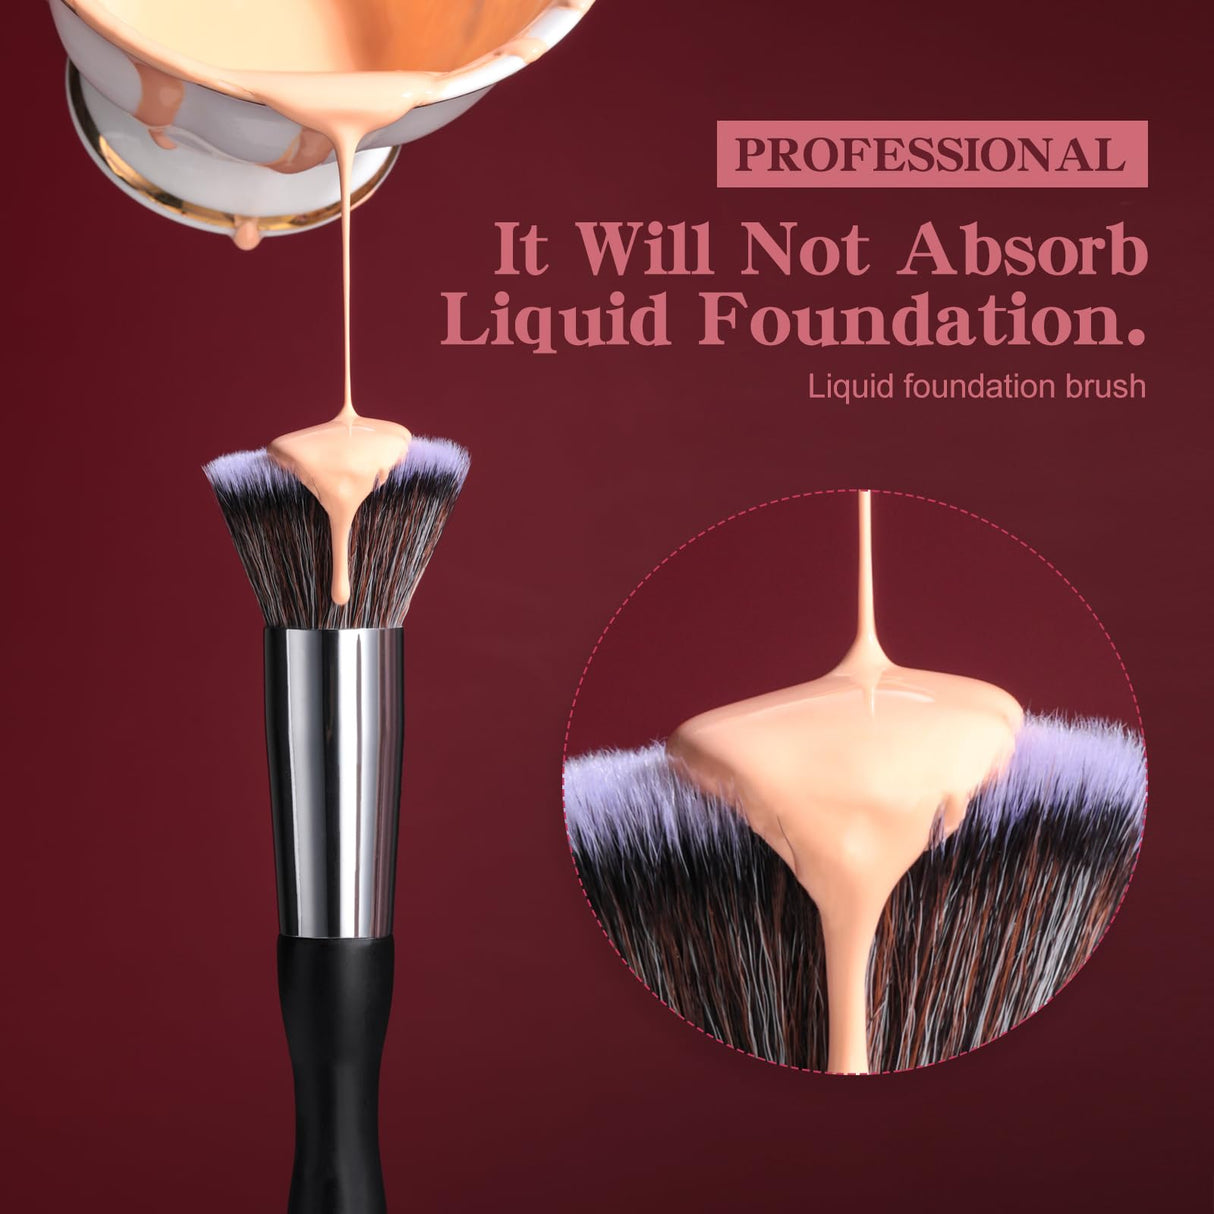 BS-MALL Makeup Brush Set 16pcs Makeup Brushes Premium Synthetic Bristles Powder Foundation Blush Contour Concealers Lip Eyeshadow Brushes Kit